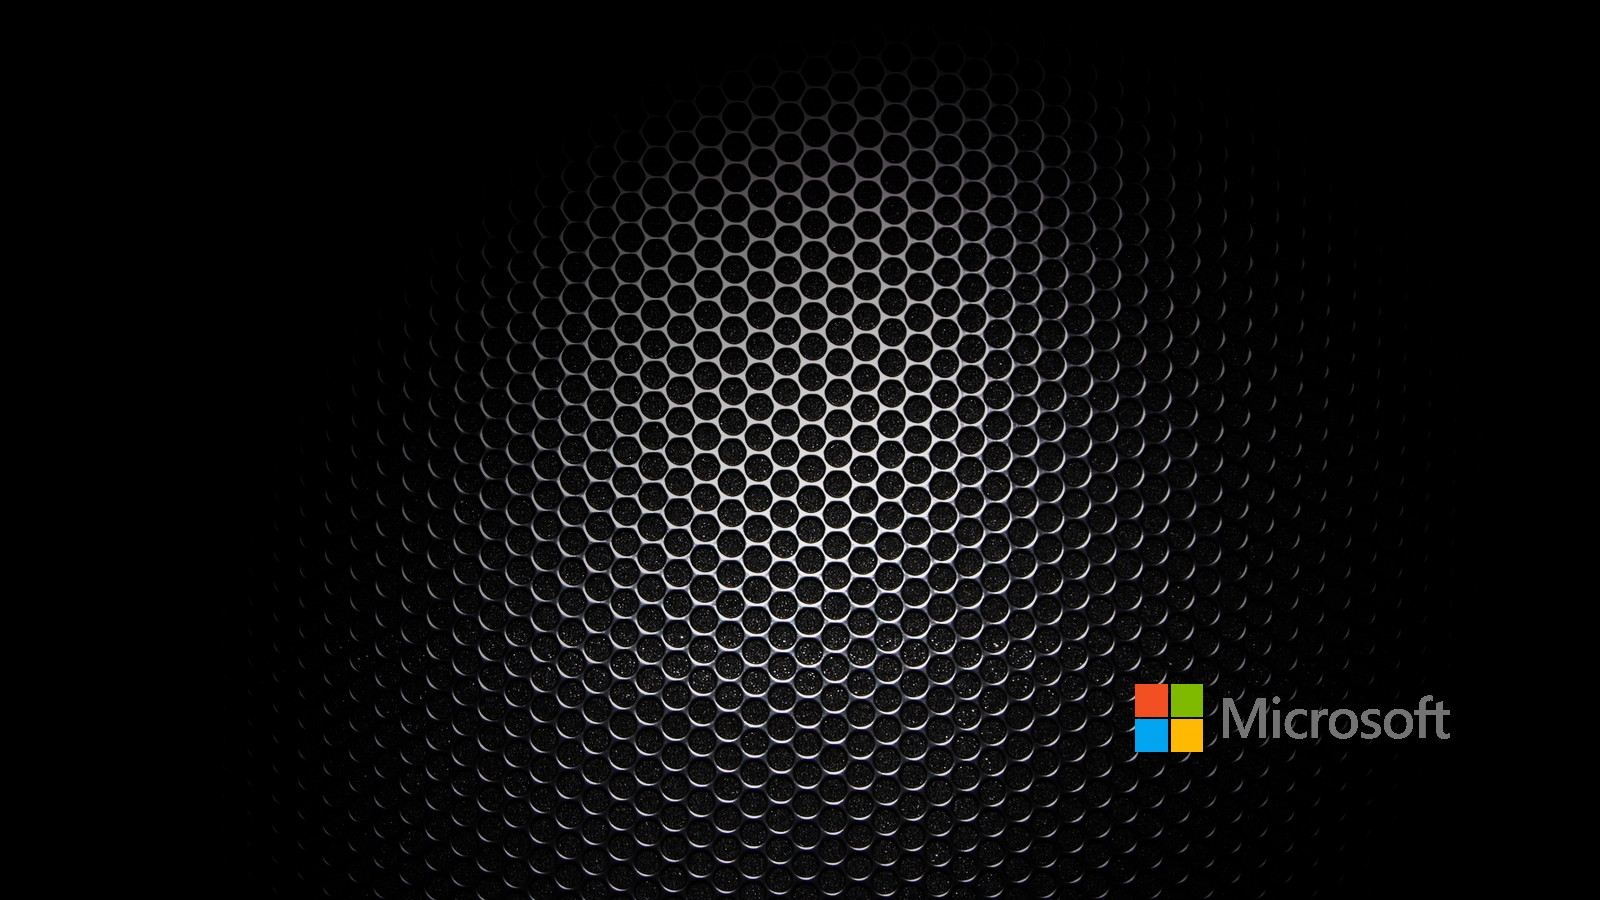 Microsoft Background On